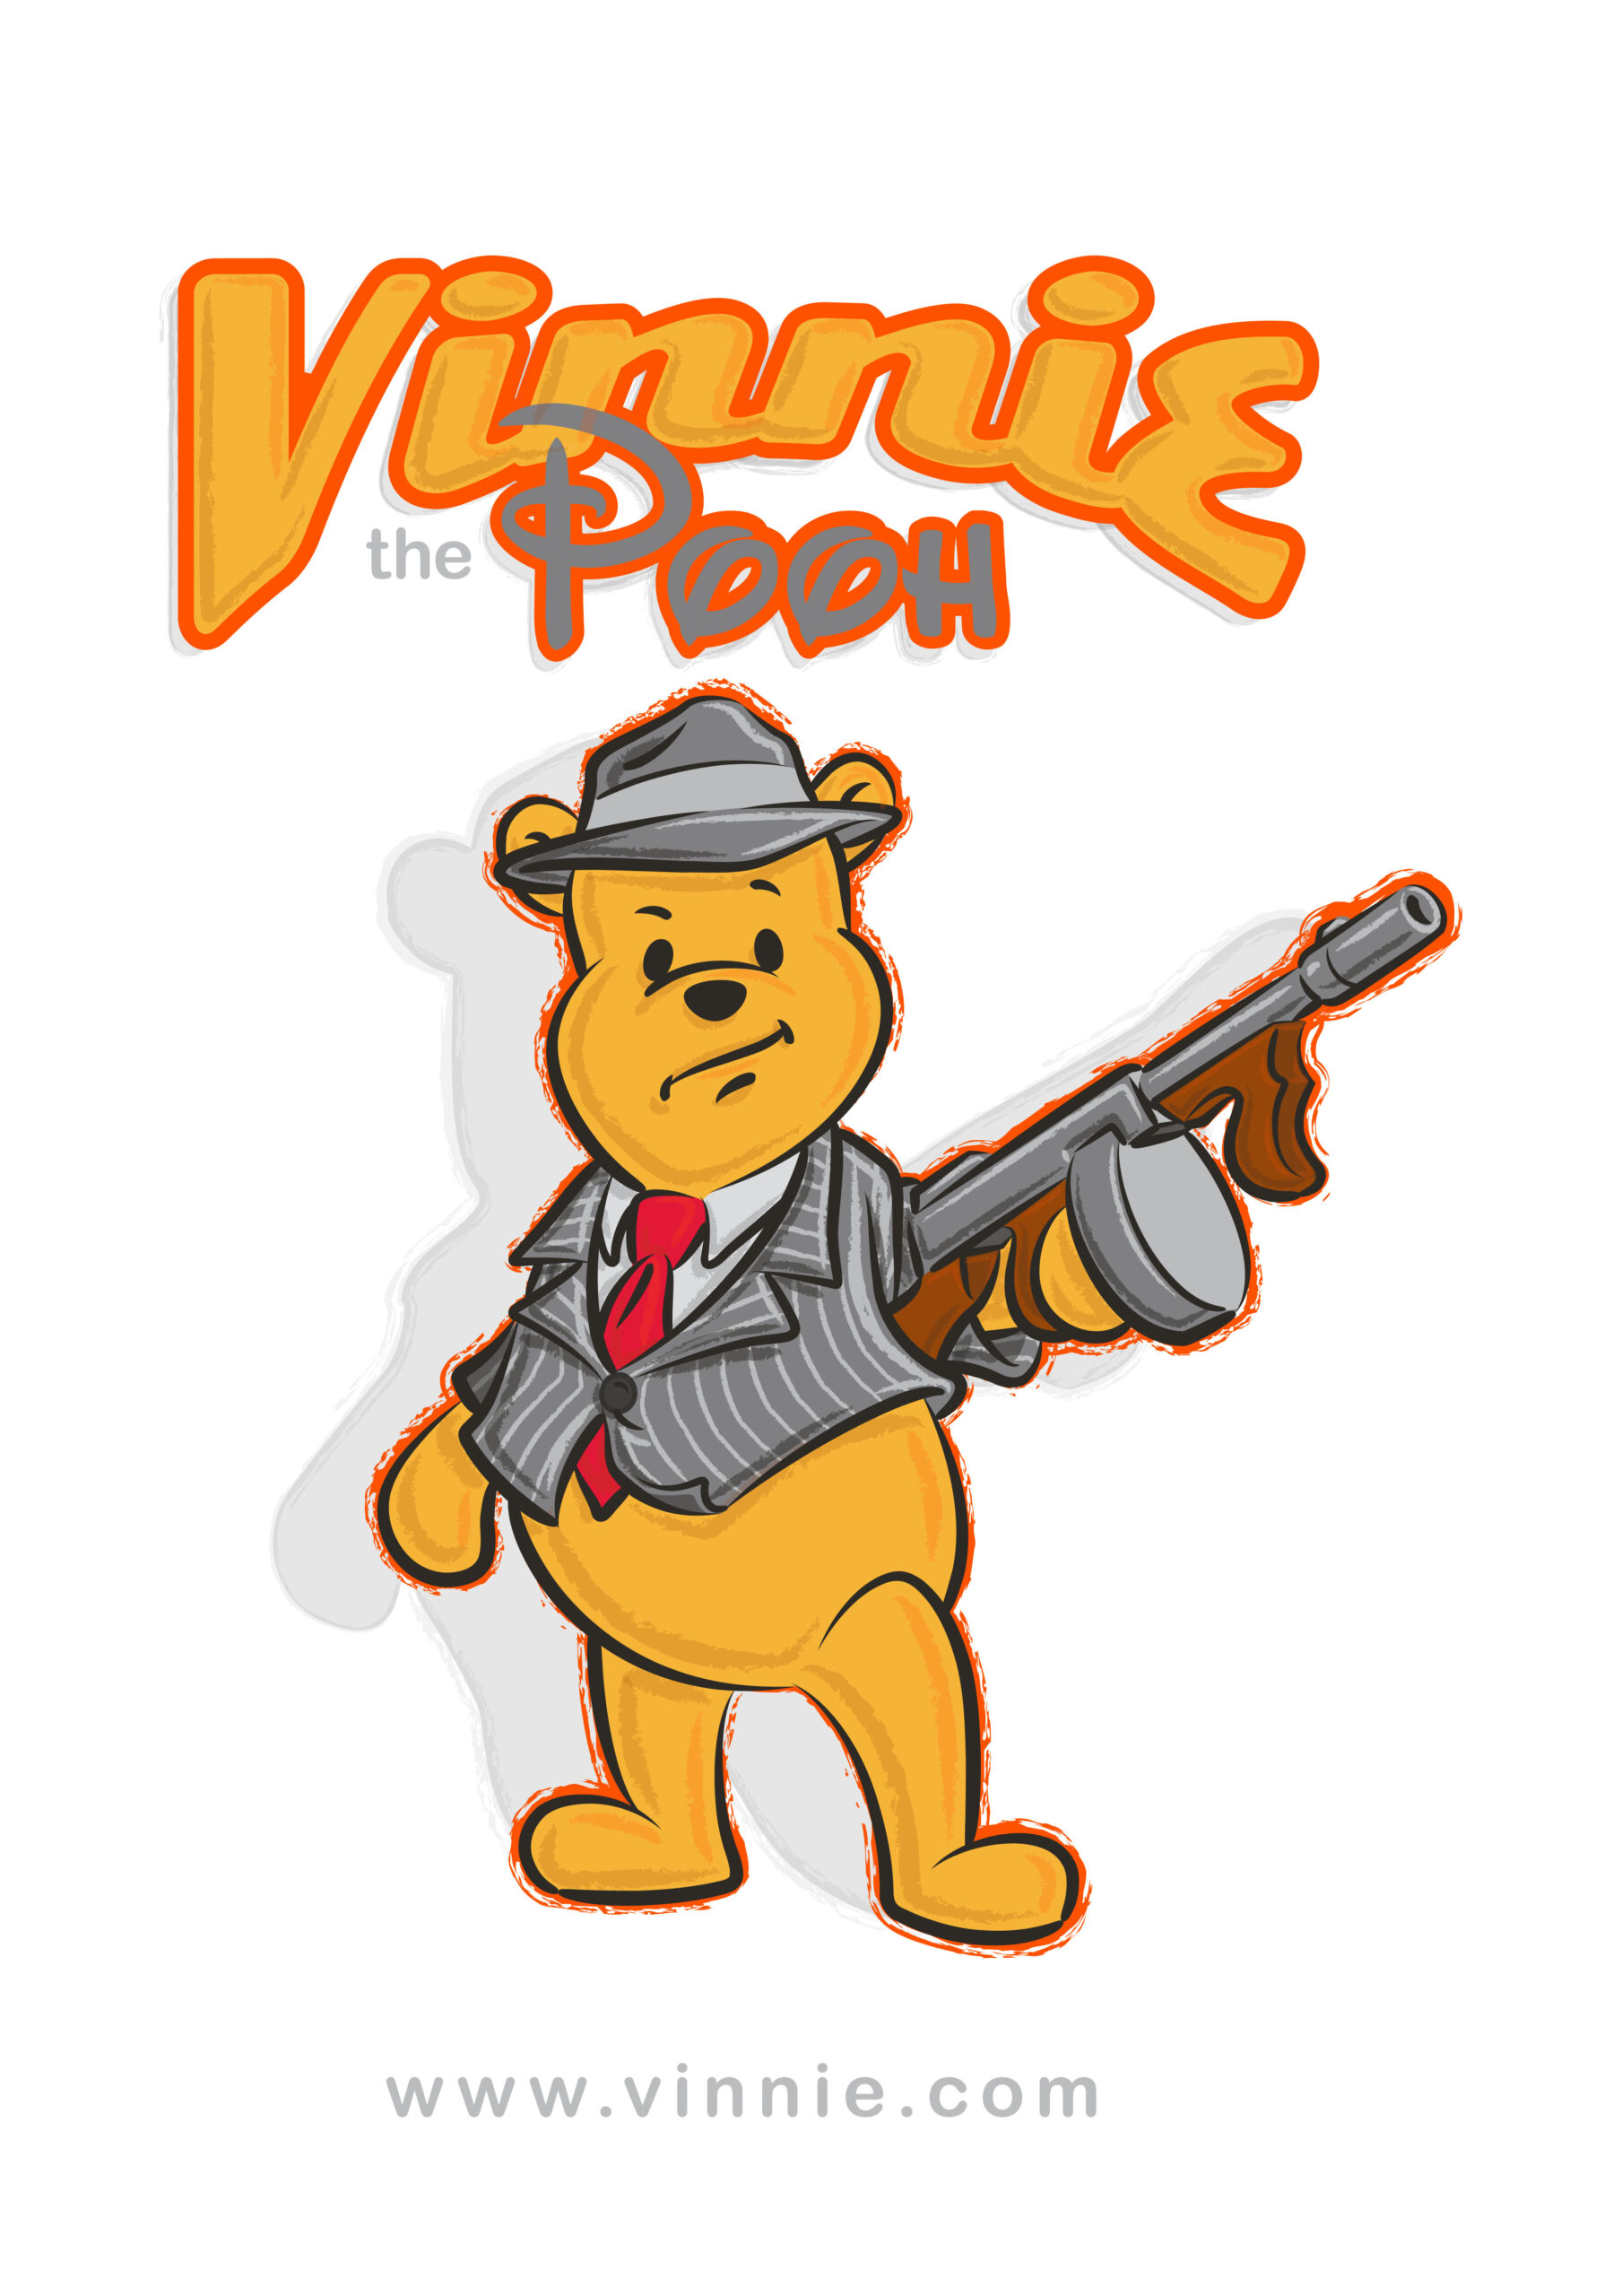 Vinnie The Pooh